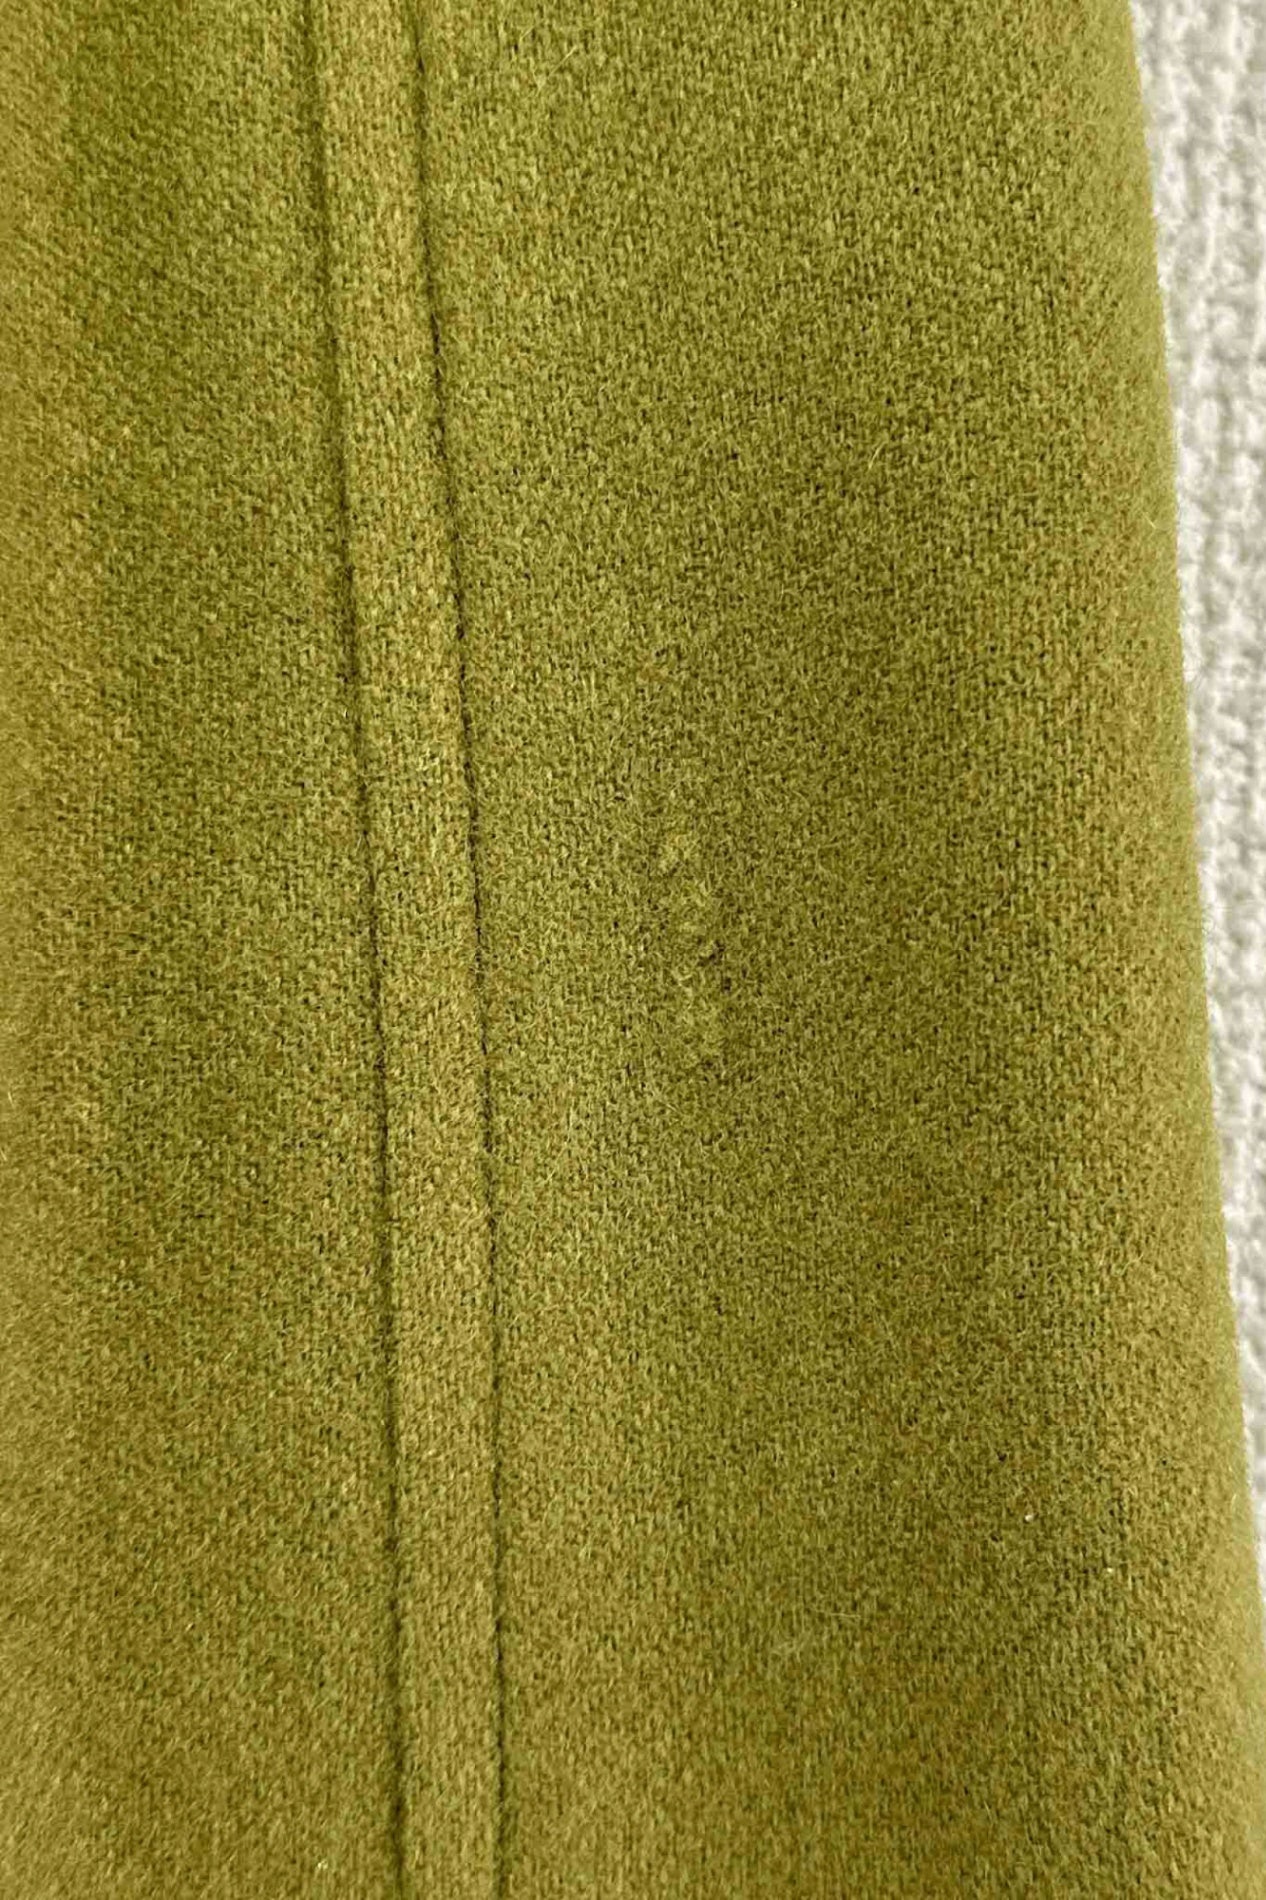 Christian Dior SPORTS green skirt